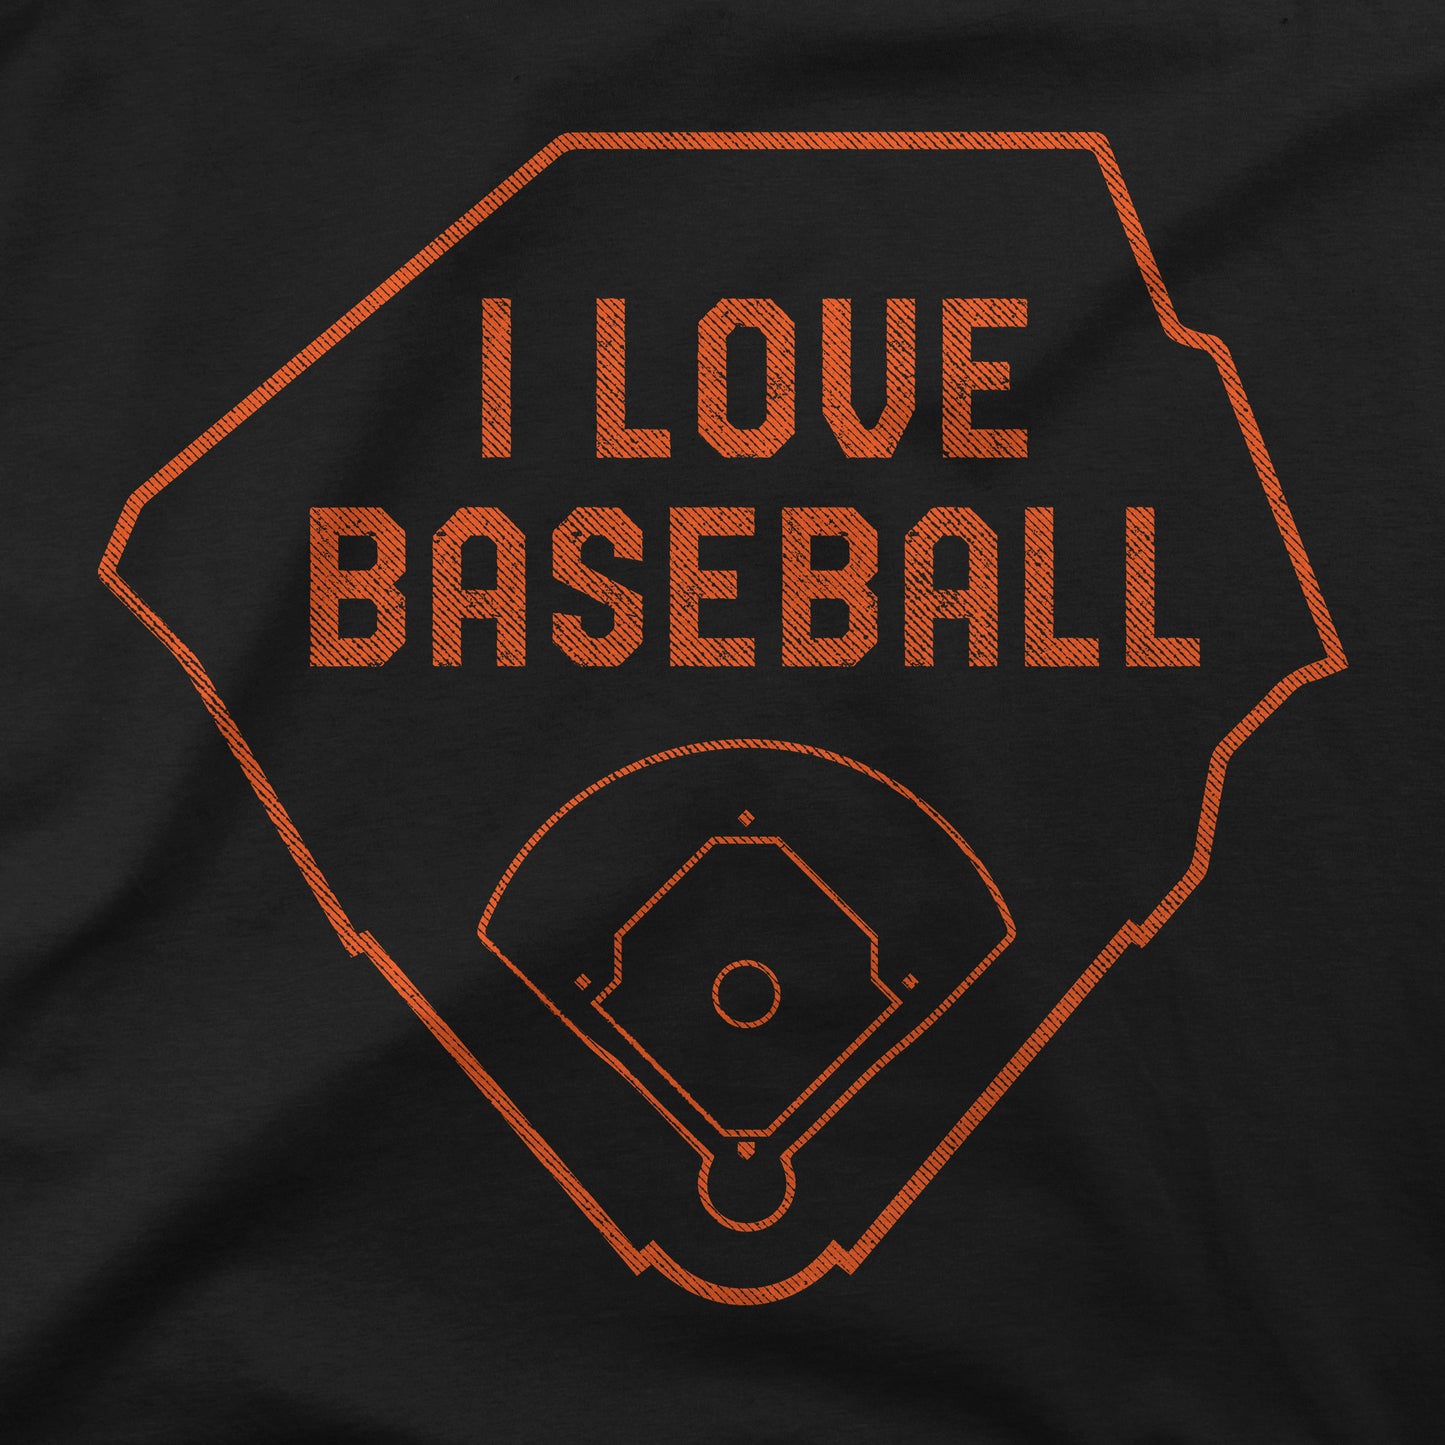 I Love Baseball '22 | San Francisco | T-Shirt